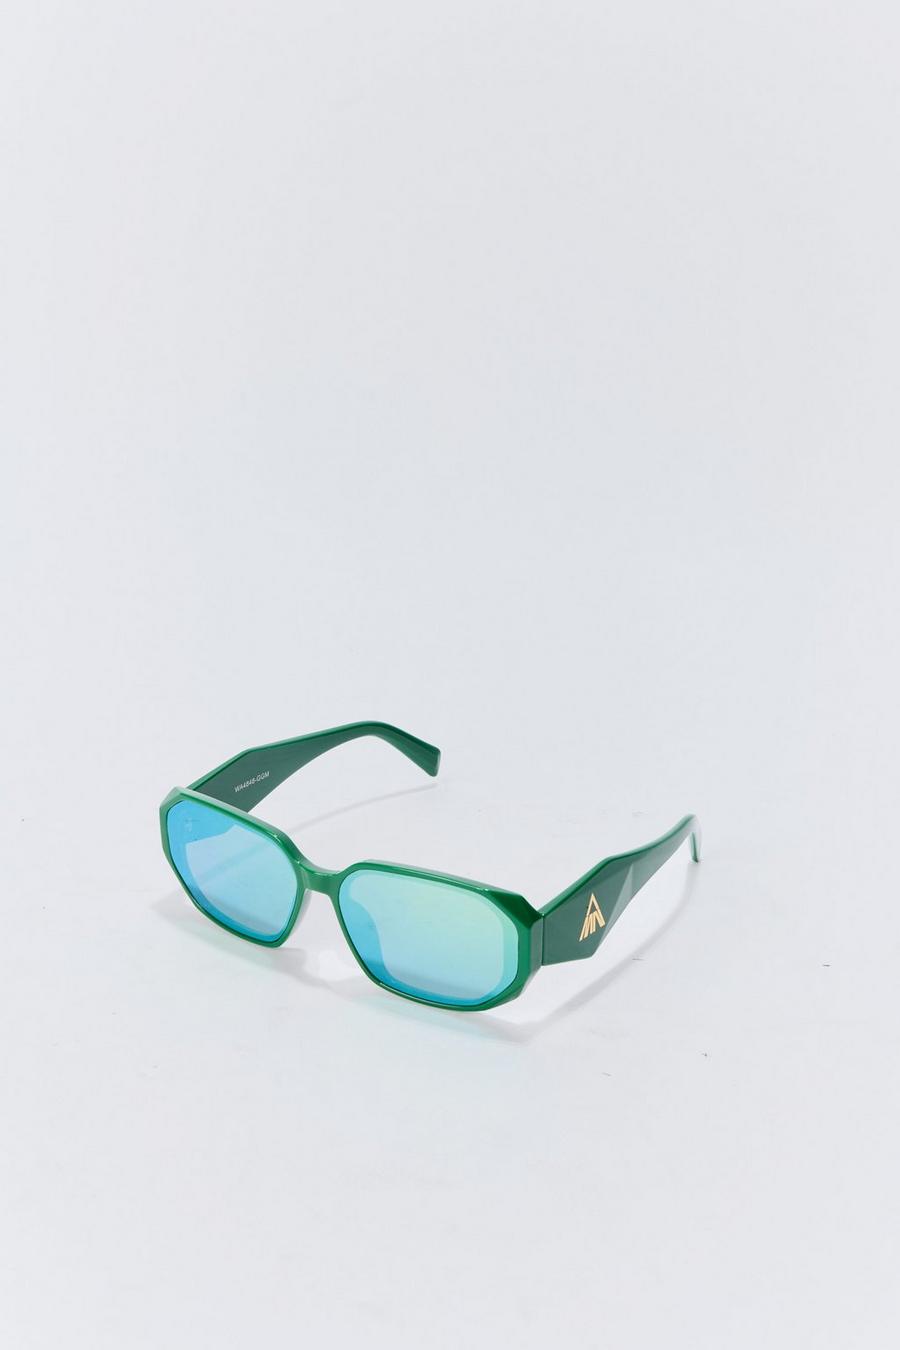 BM Rectangular Plastic Sunglasses In Green